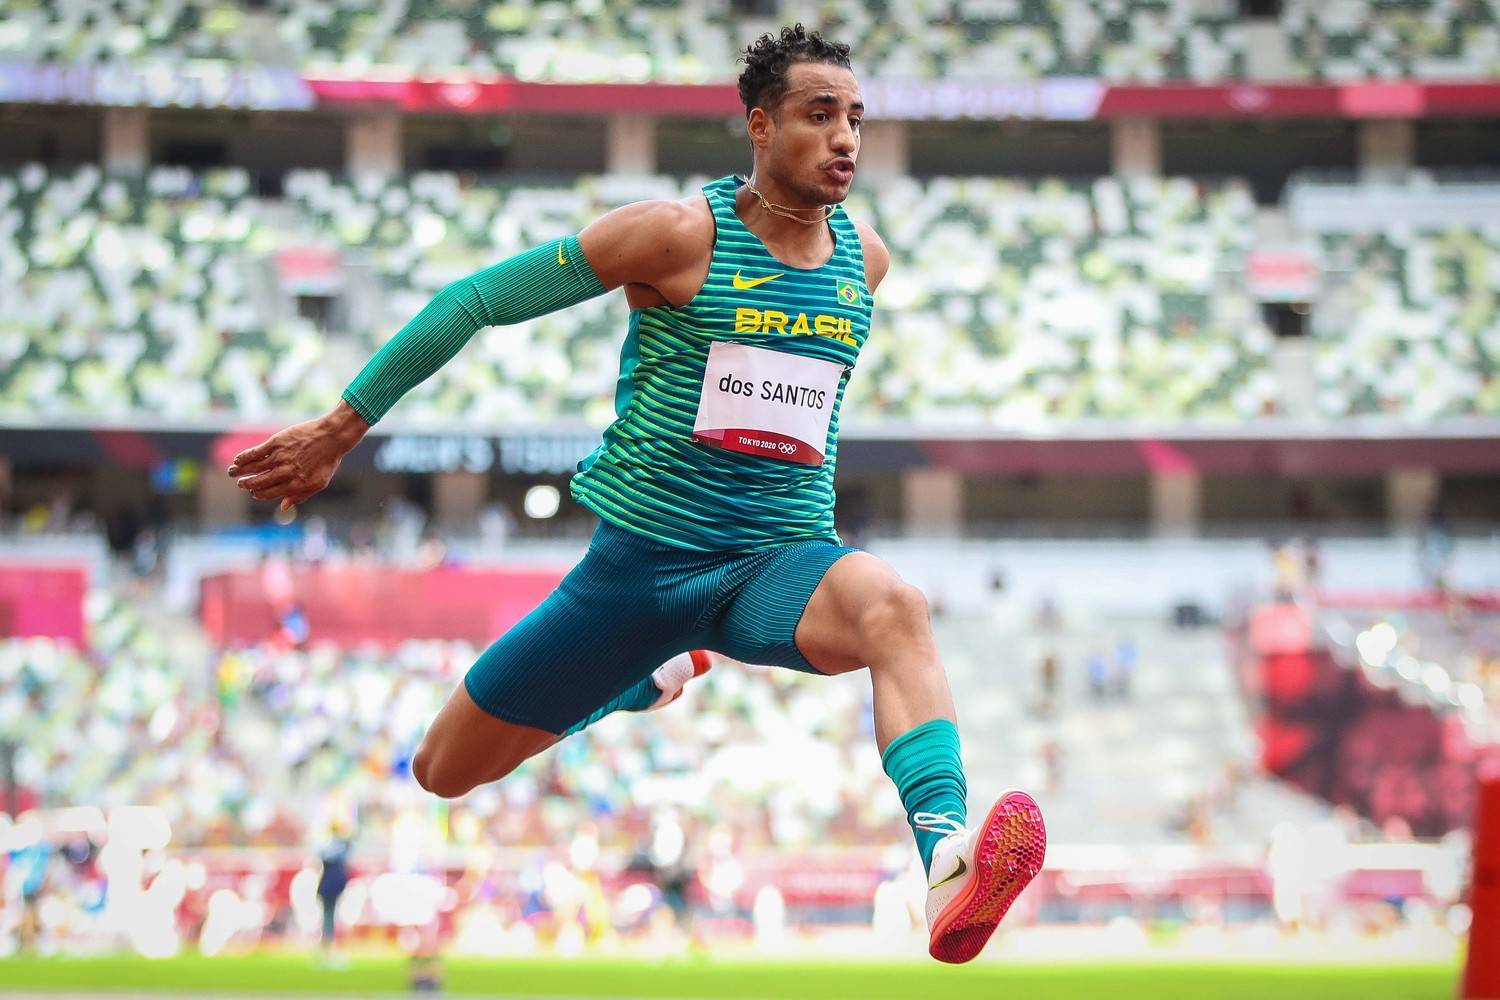 Lucas Vilar - 200m rasos - Jogos Olímpicos de Tóquio 2020